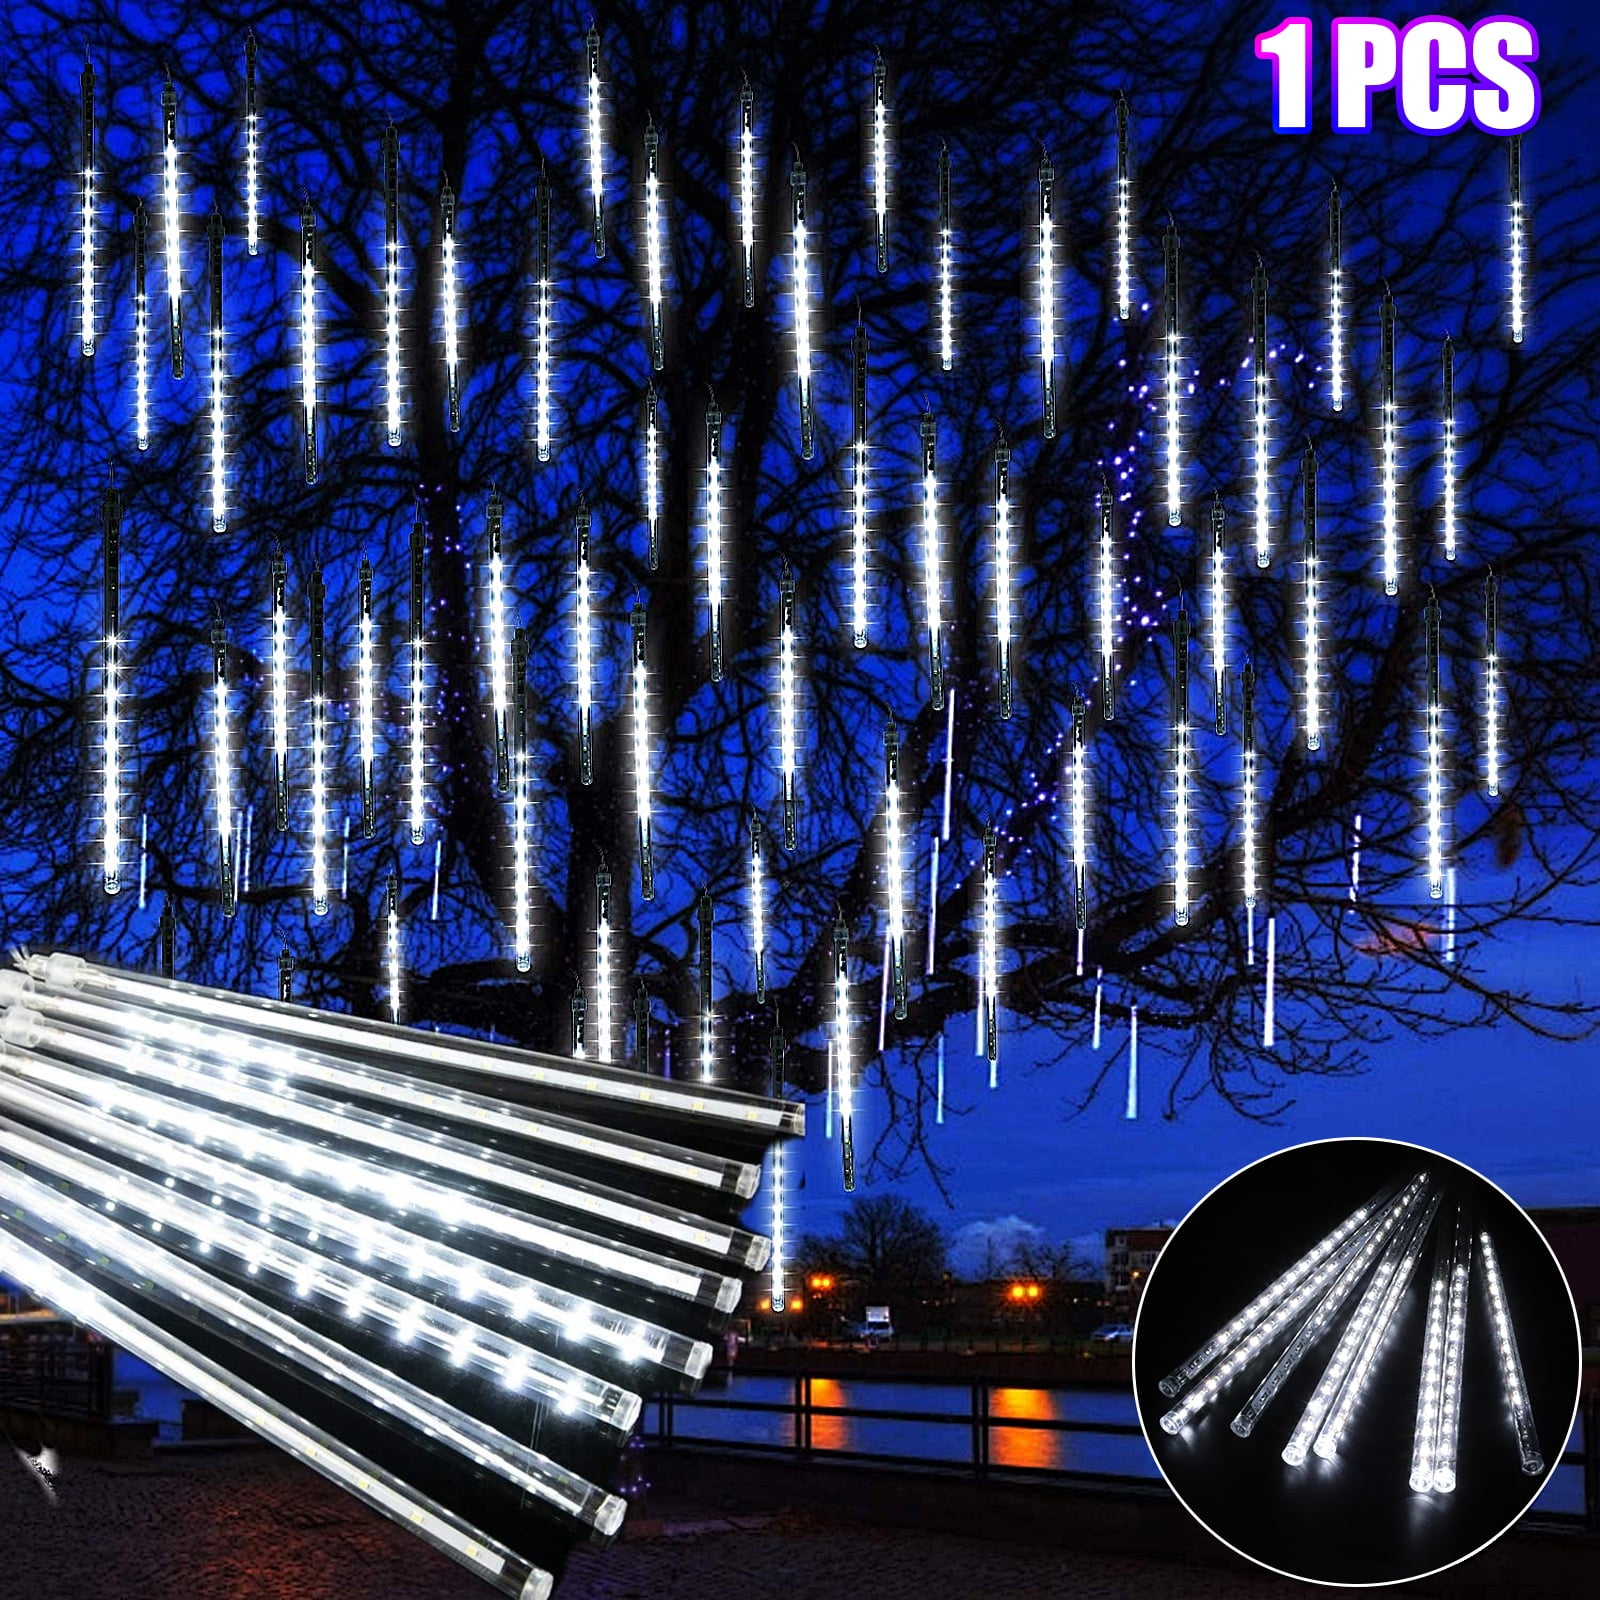 144 LED Lights Meteor Shower Tree Outdoor String Halloween Xmas Decoration 